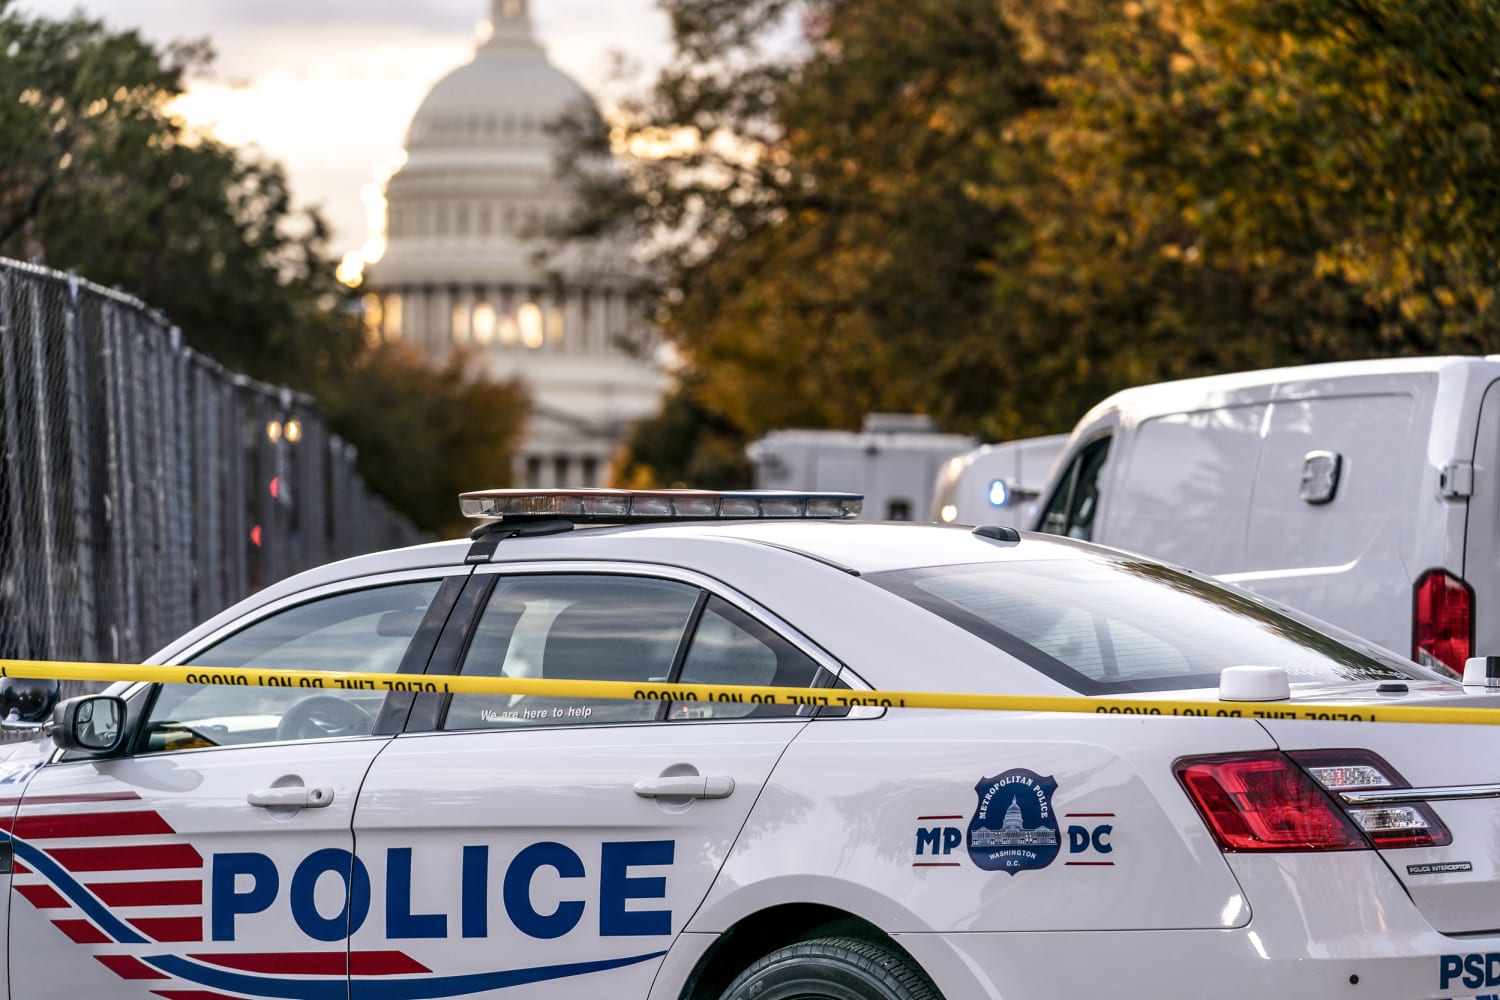 On 3rd anniversary of George Floyd’s death, Biden stops GOP-led effort to block DC police reform law